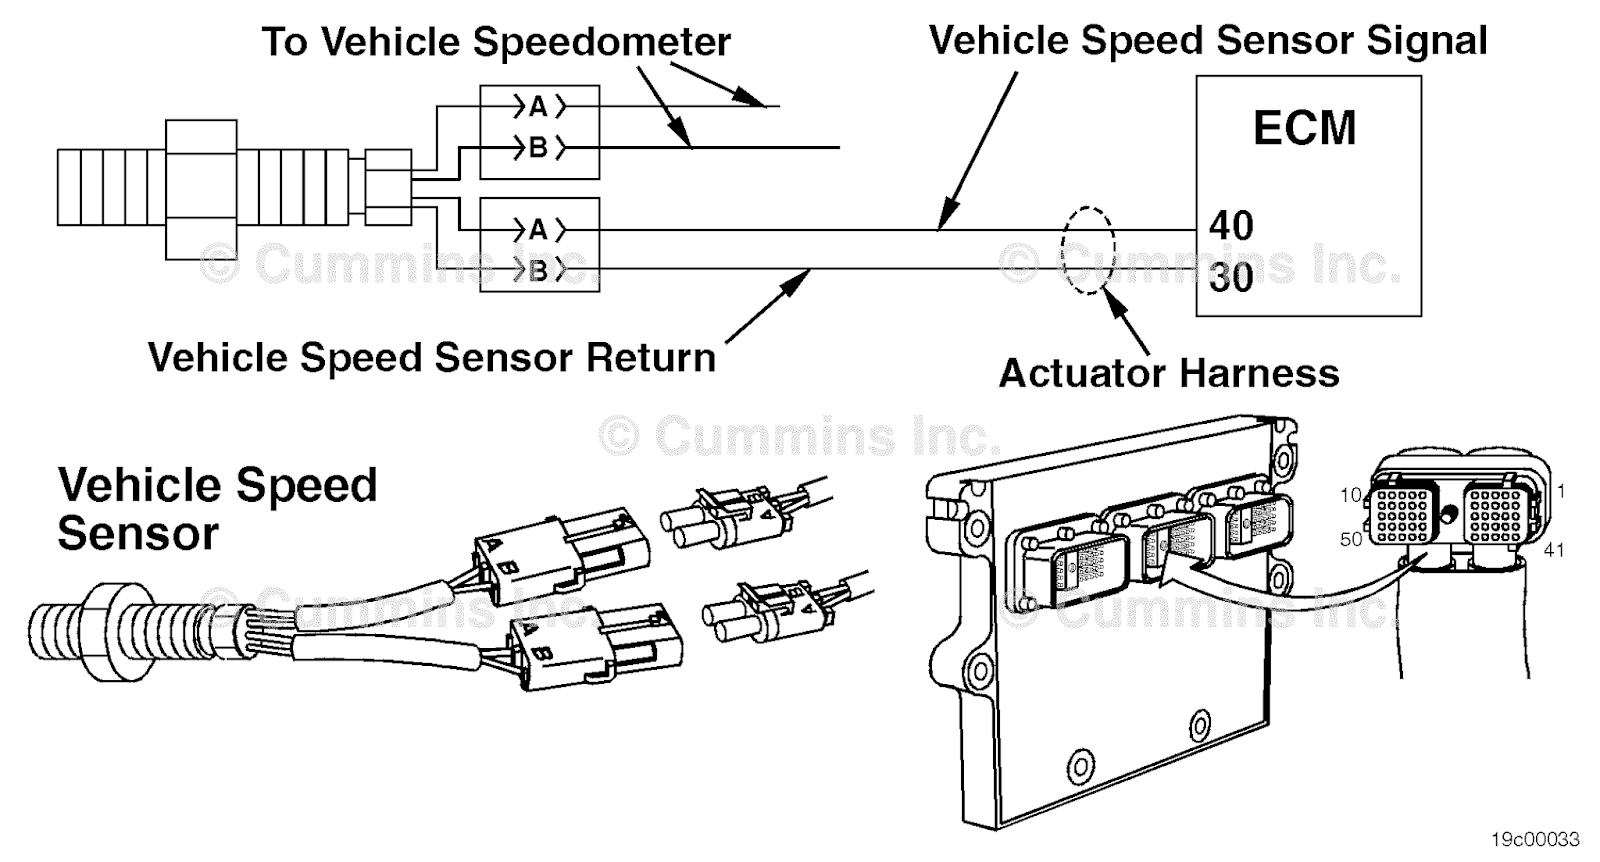 Vehicle Speed Sensor Circuit.